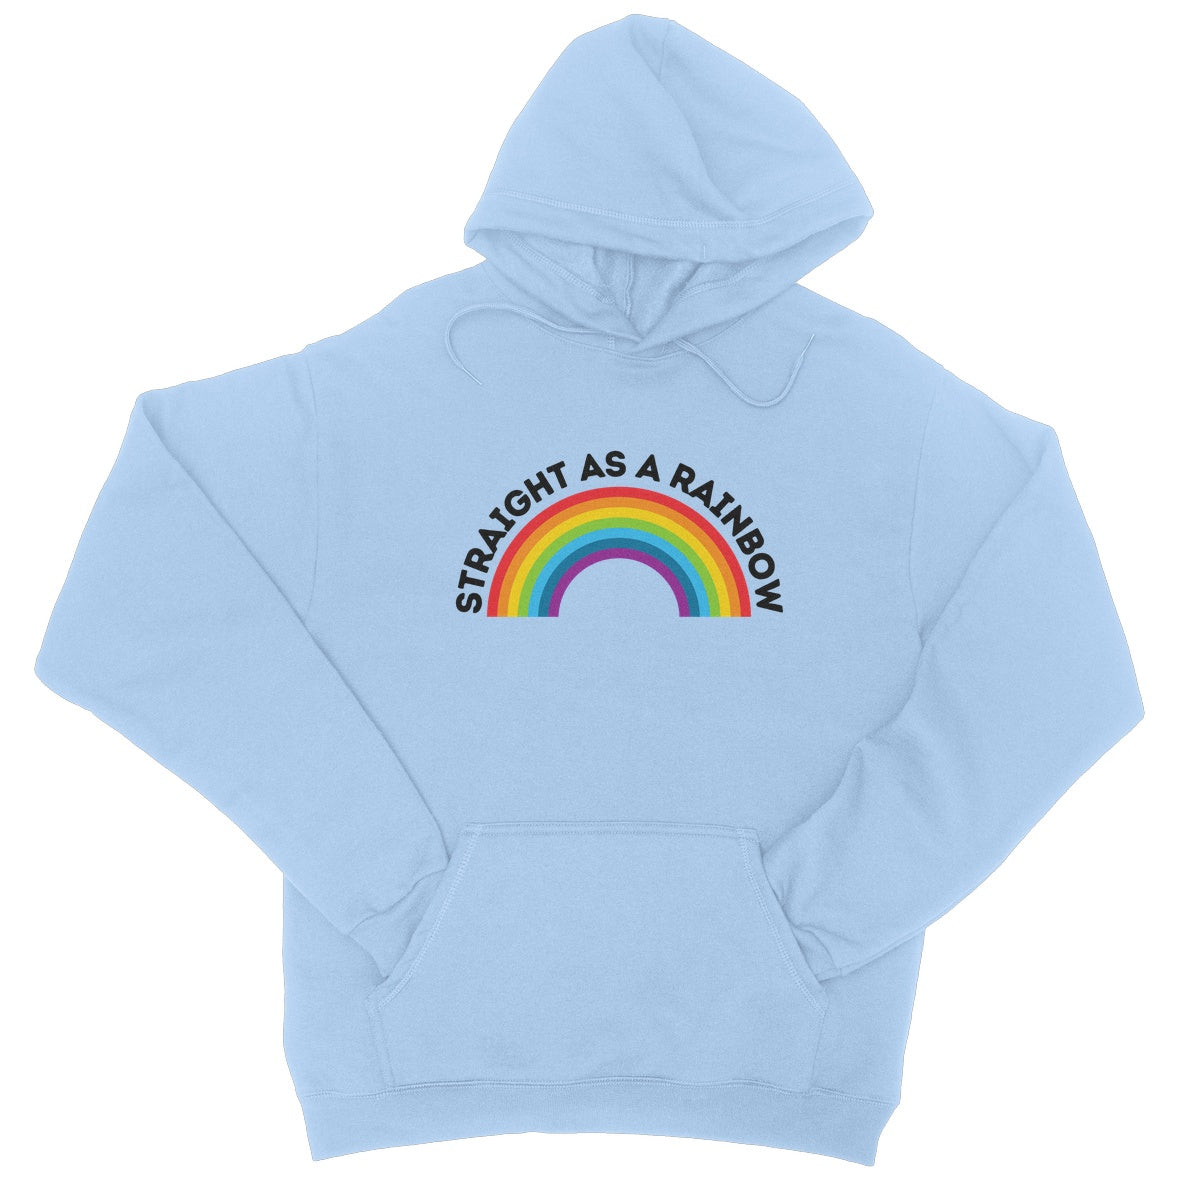 straight as a rainbow hoodie blue